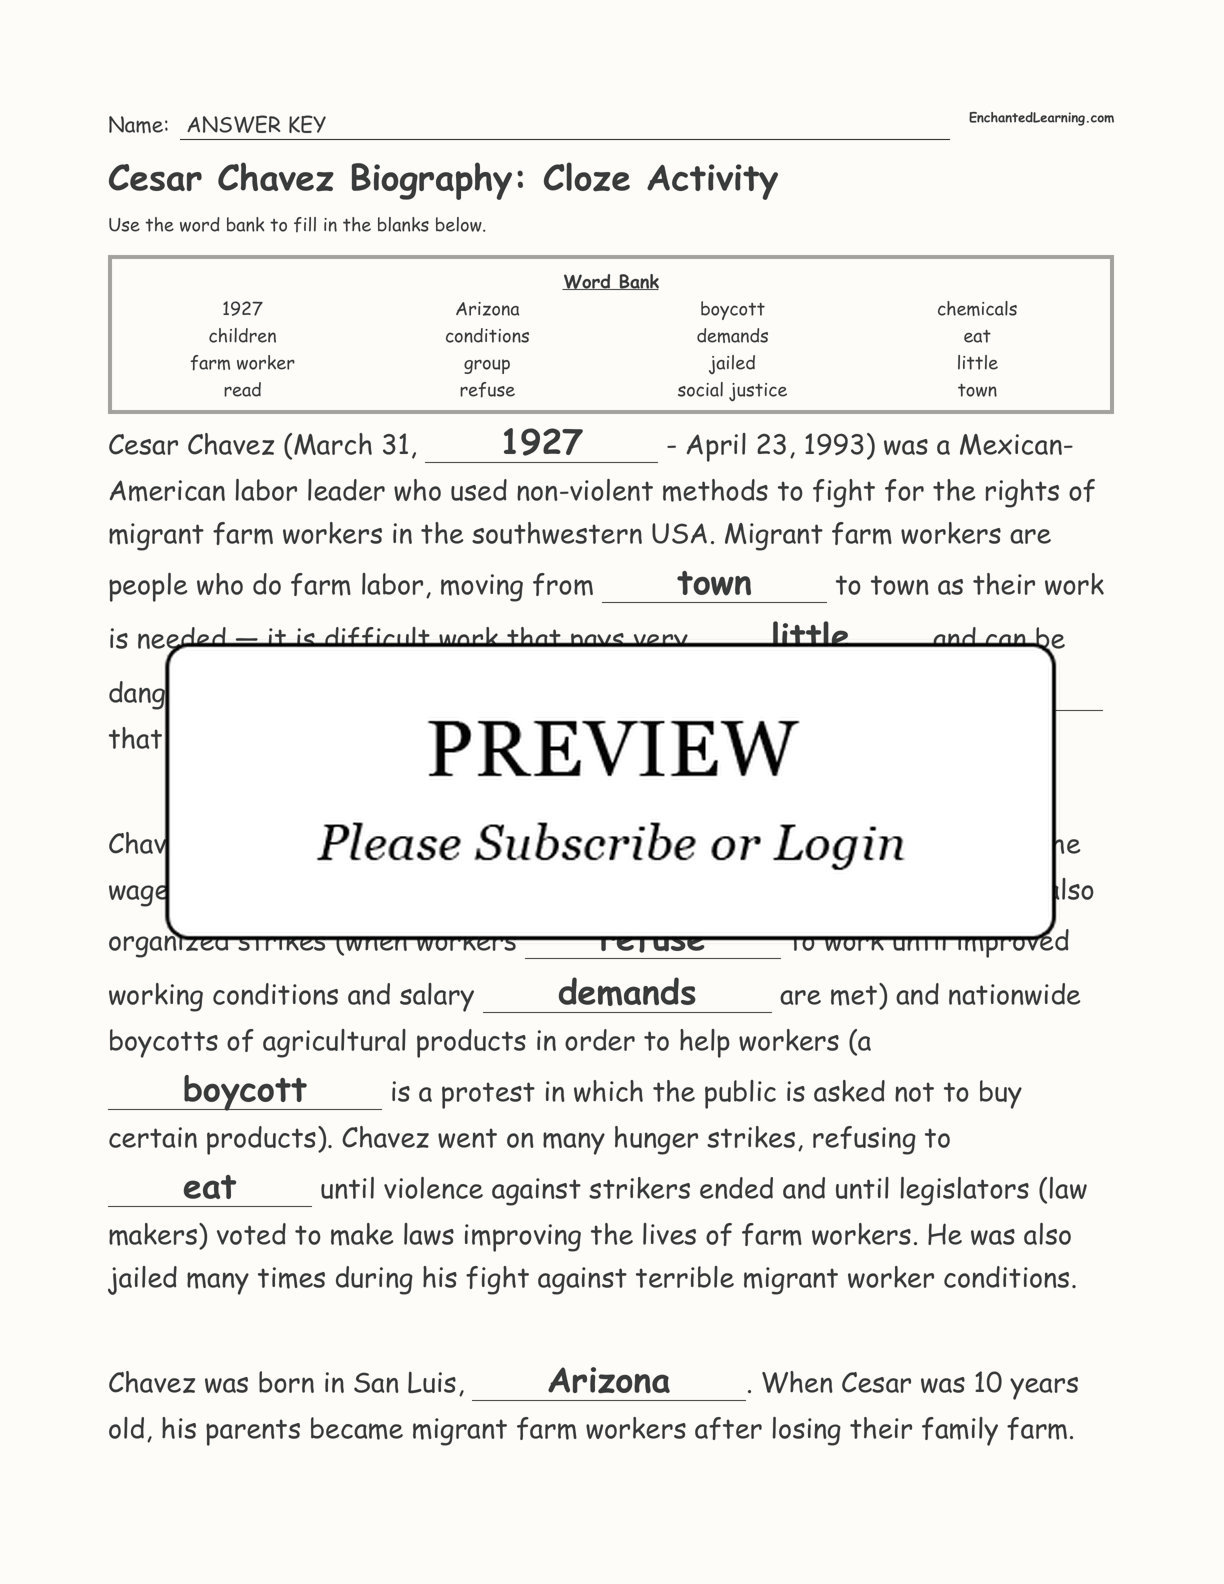 Cesar Chavez Biography: Cloze Activity interactive worksheet page 3